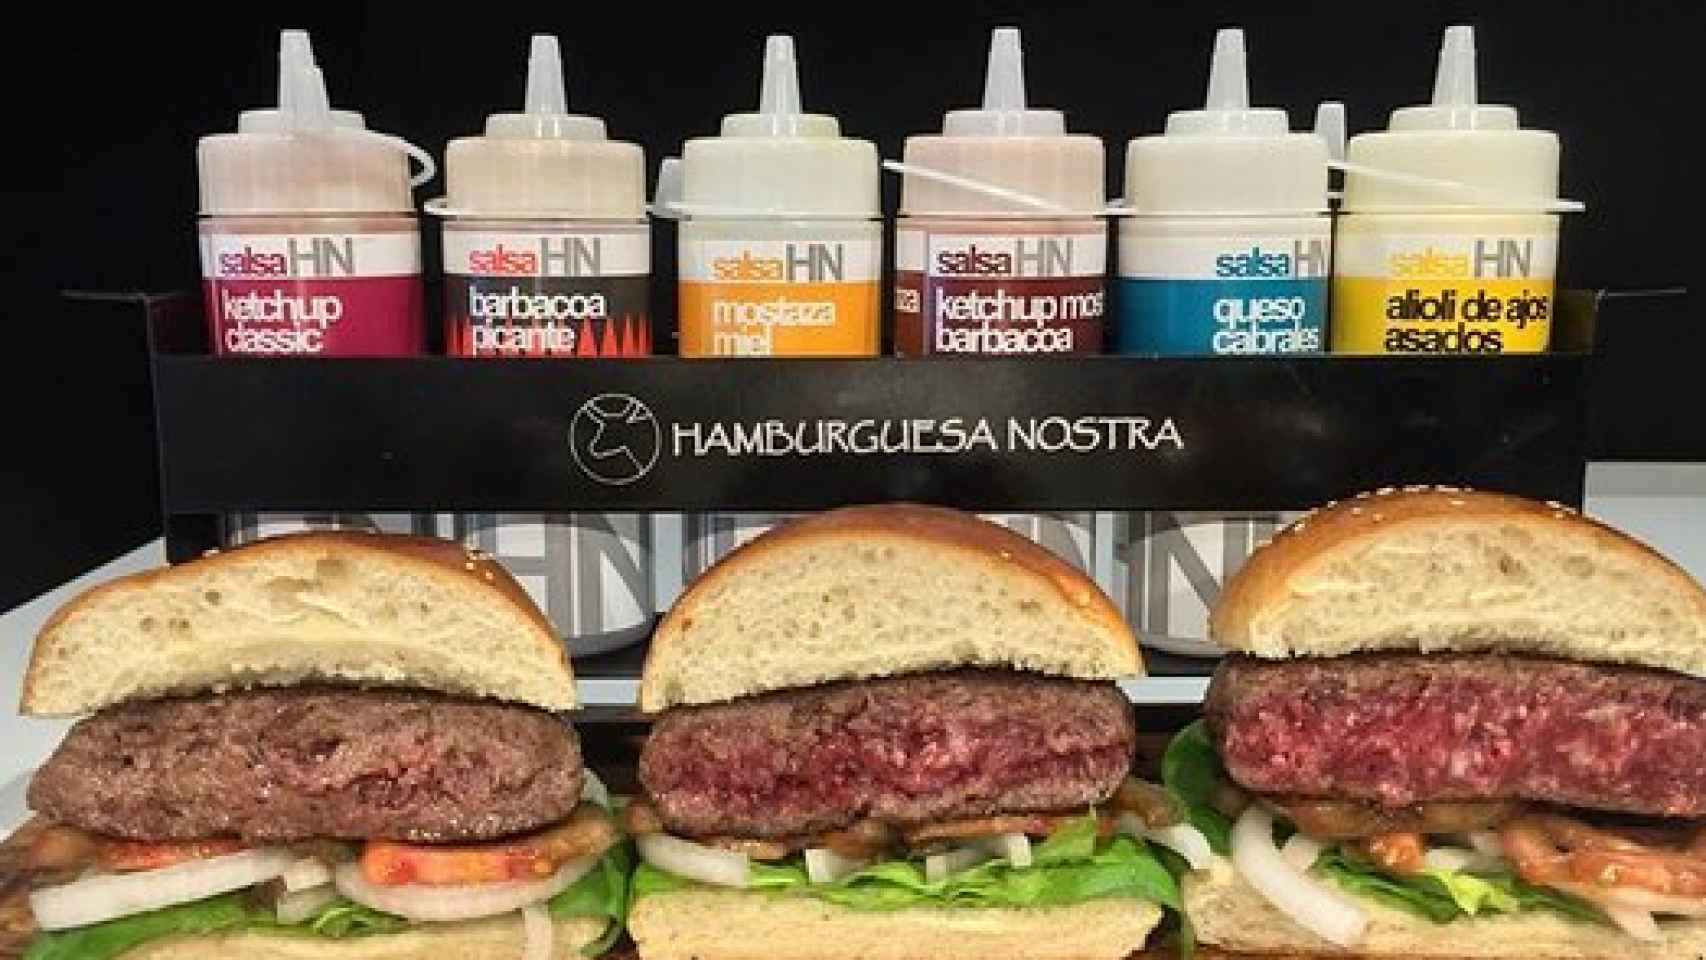 Variedad de hamburguesas y salsas de Hamburguesa Nostra Málaga